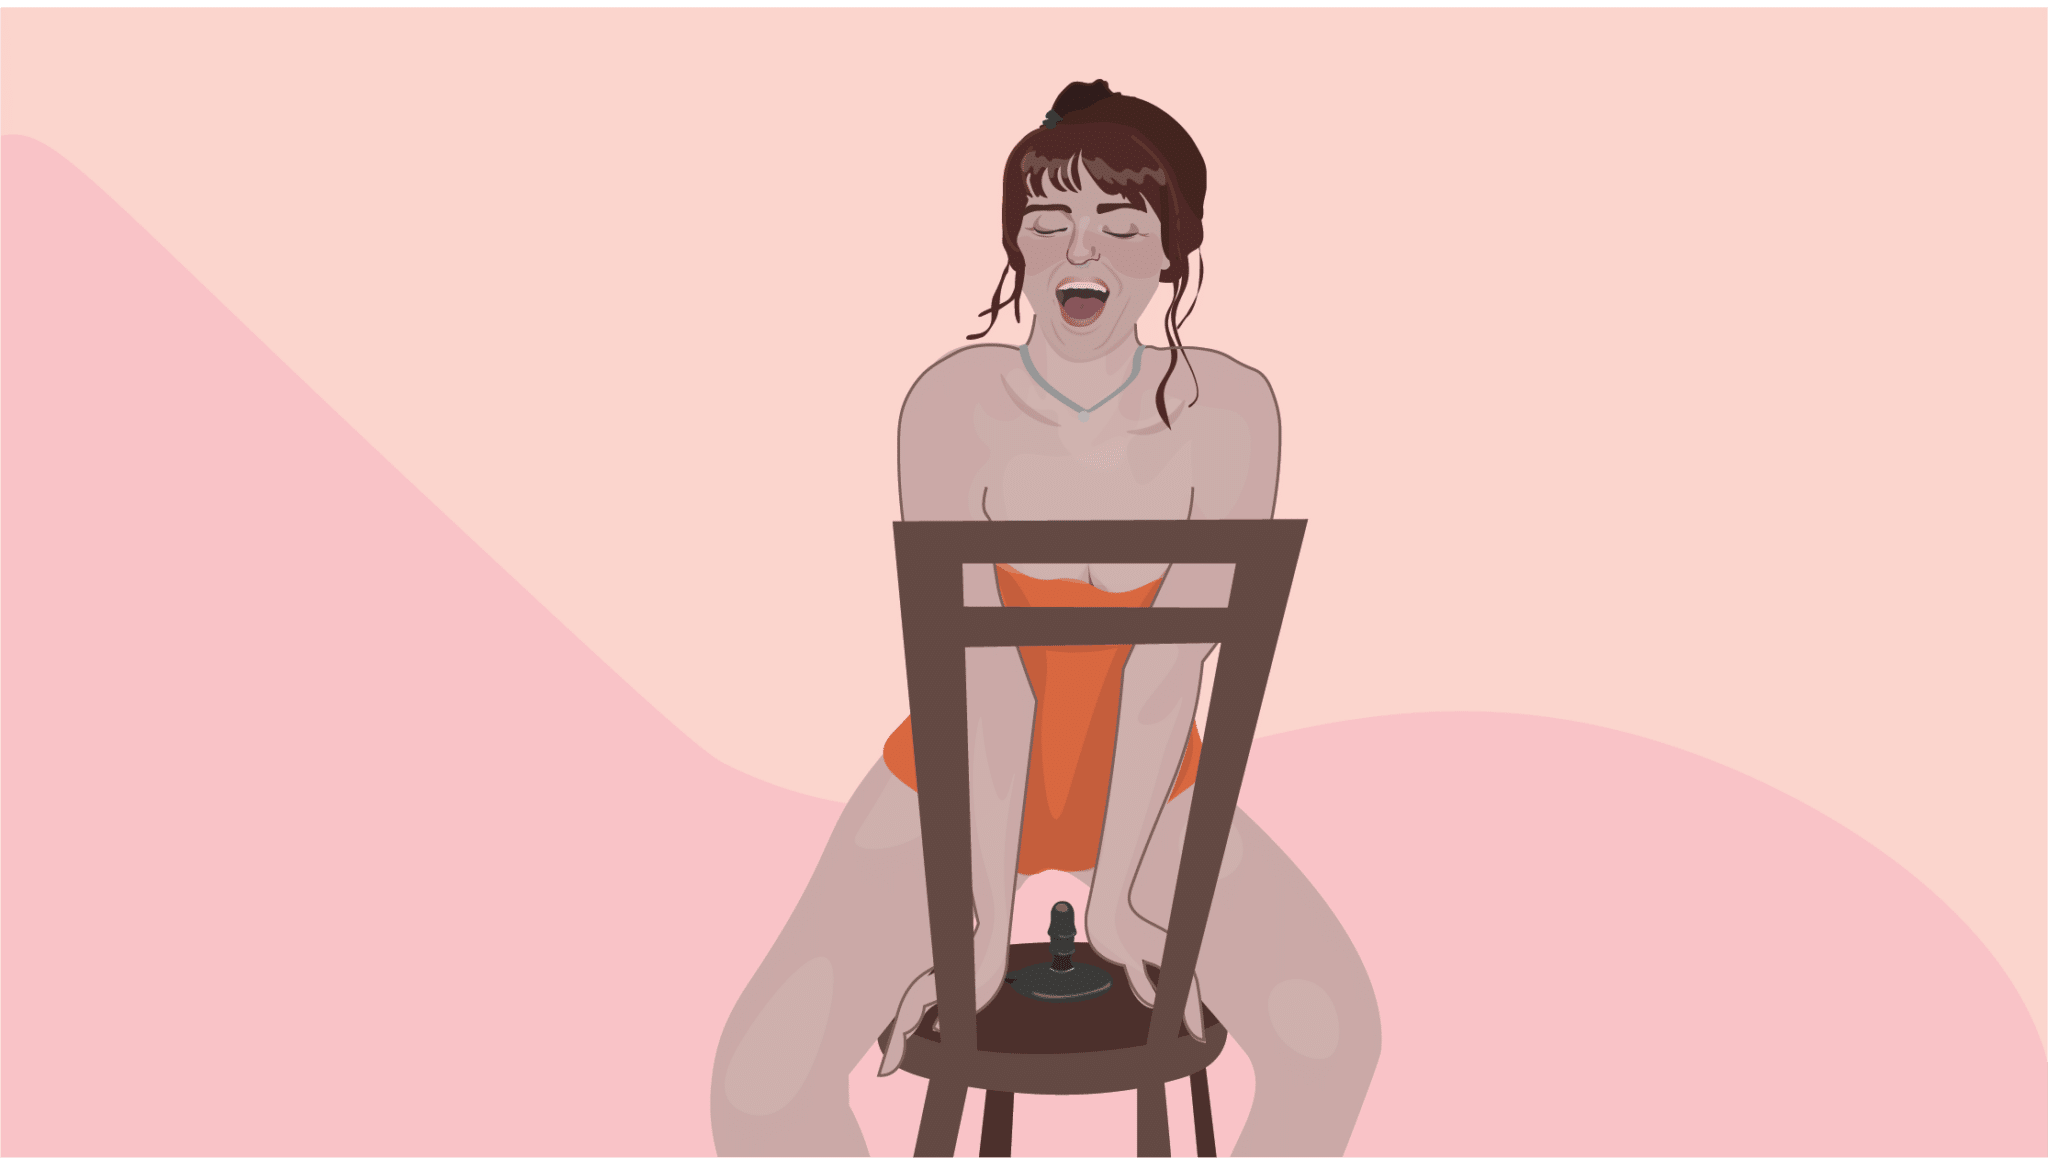 illustrated masturbation positions, chair mounted dildo